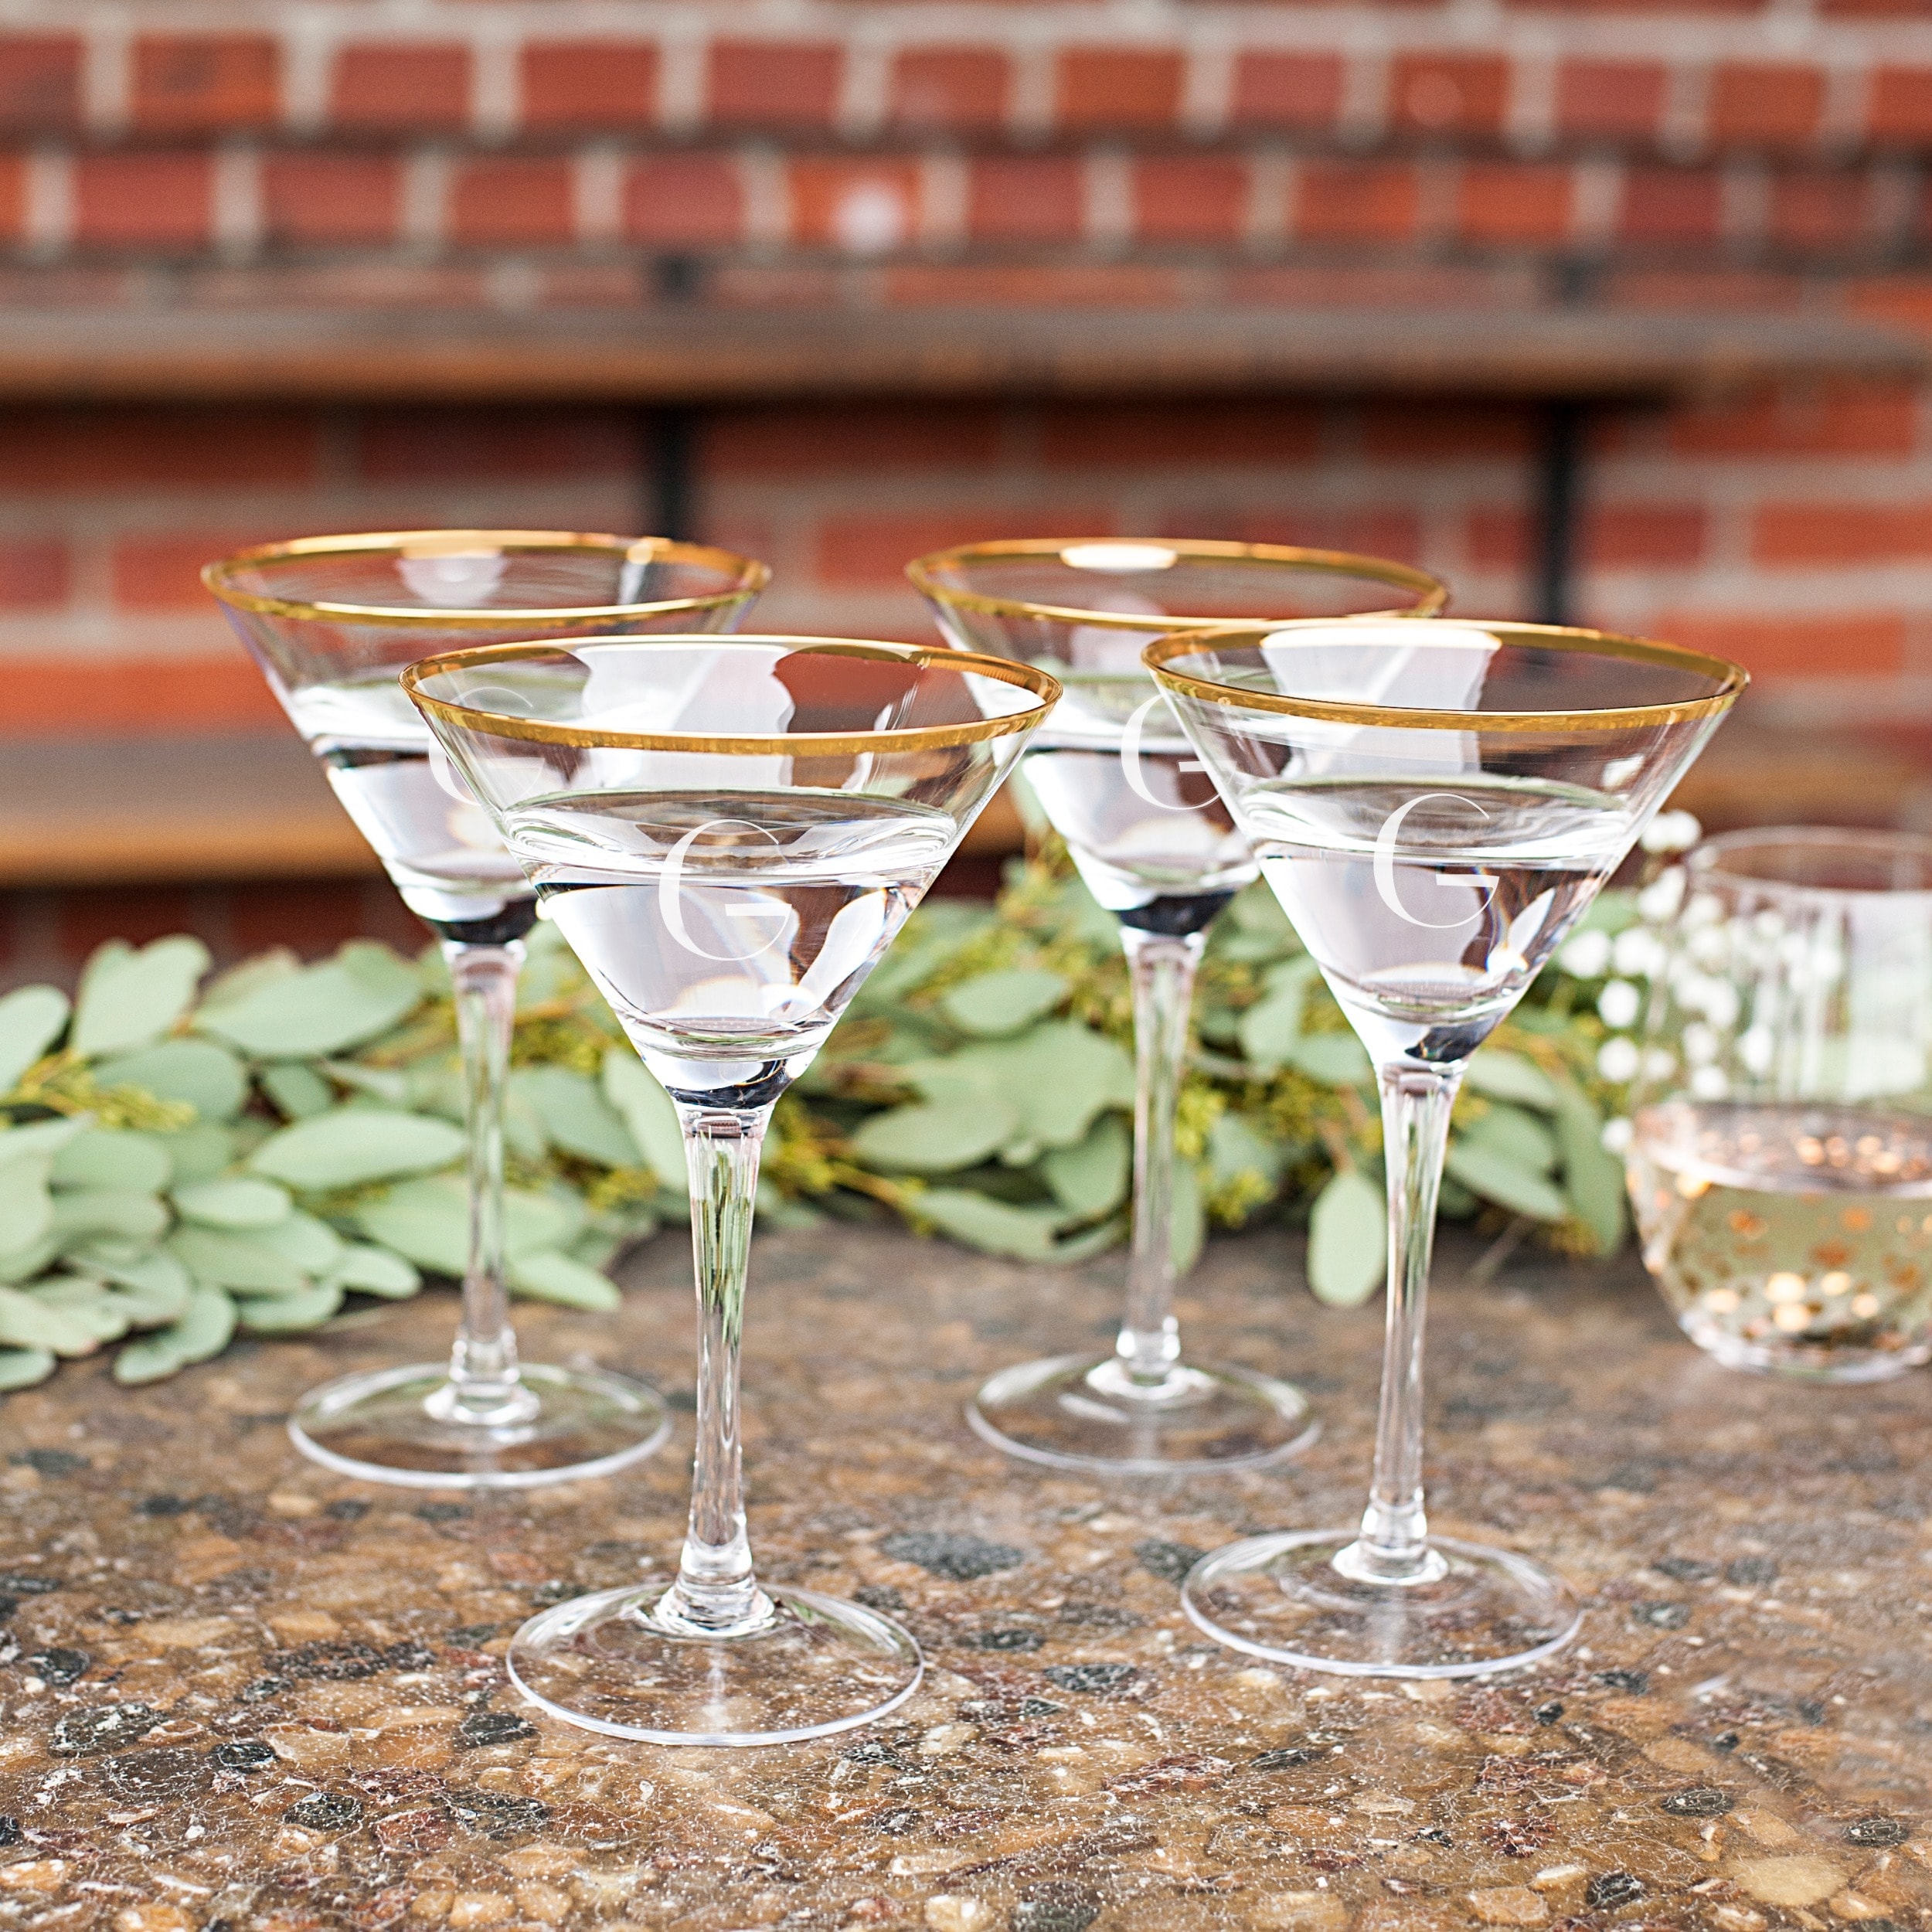 Extra Large Martini Glass - 10 oz